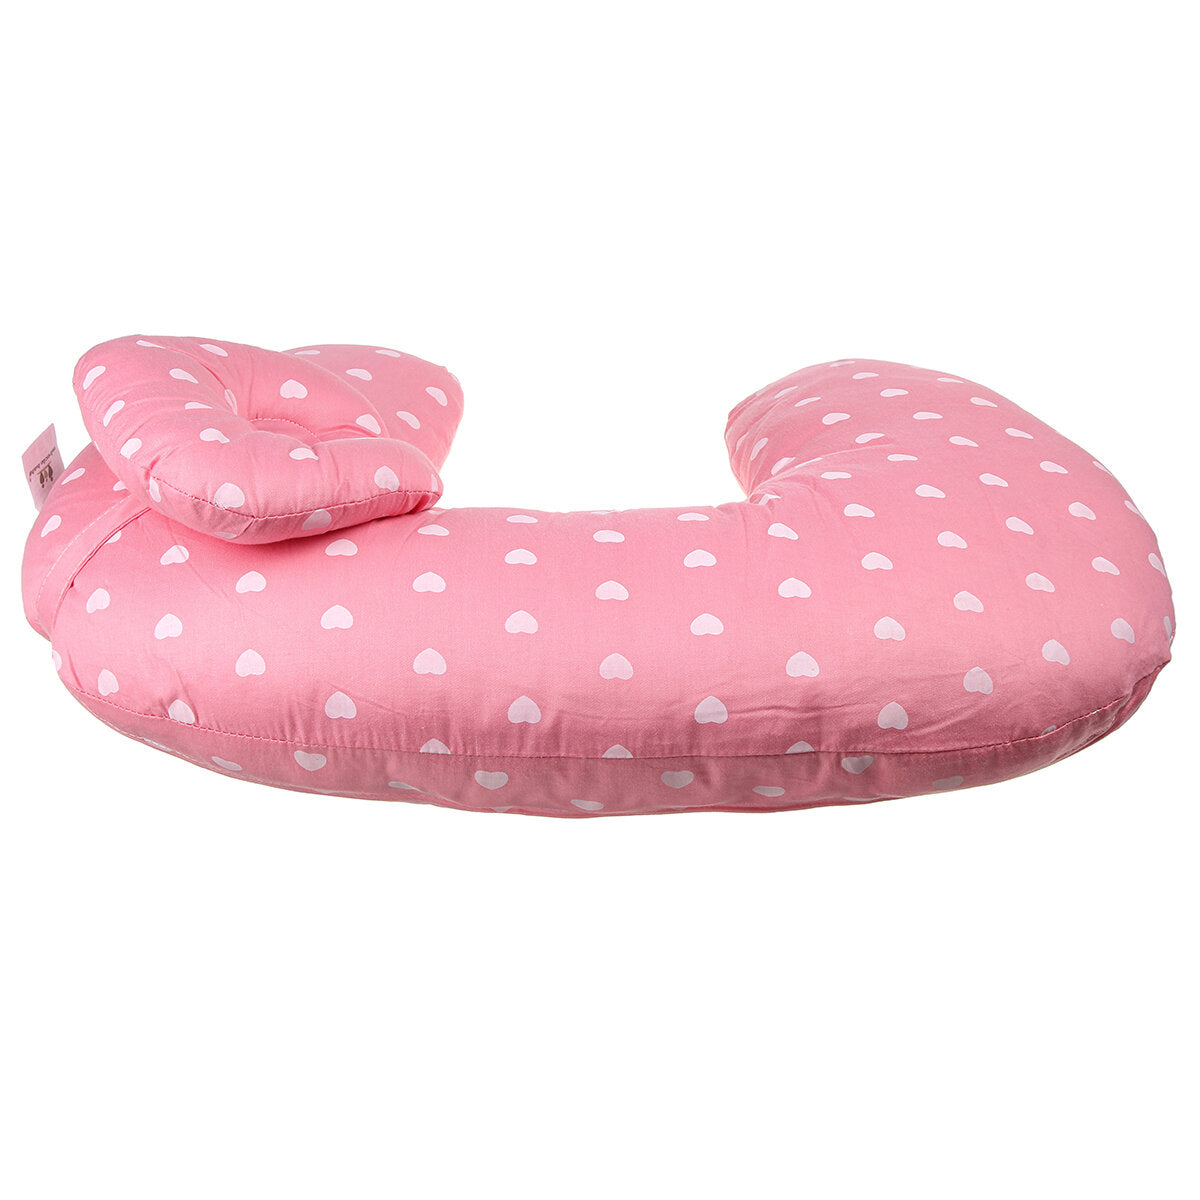 Baby Cot Pillows Newborn Infant Anti Flat Head Cushion Neck Anti Roll Support